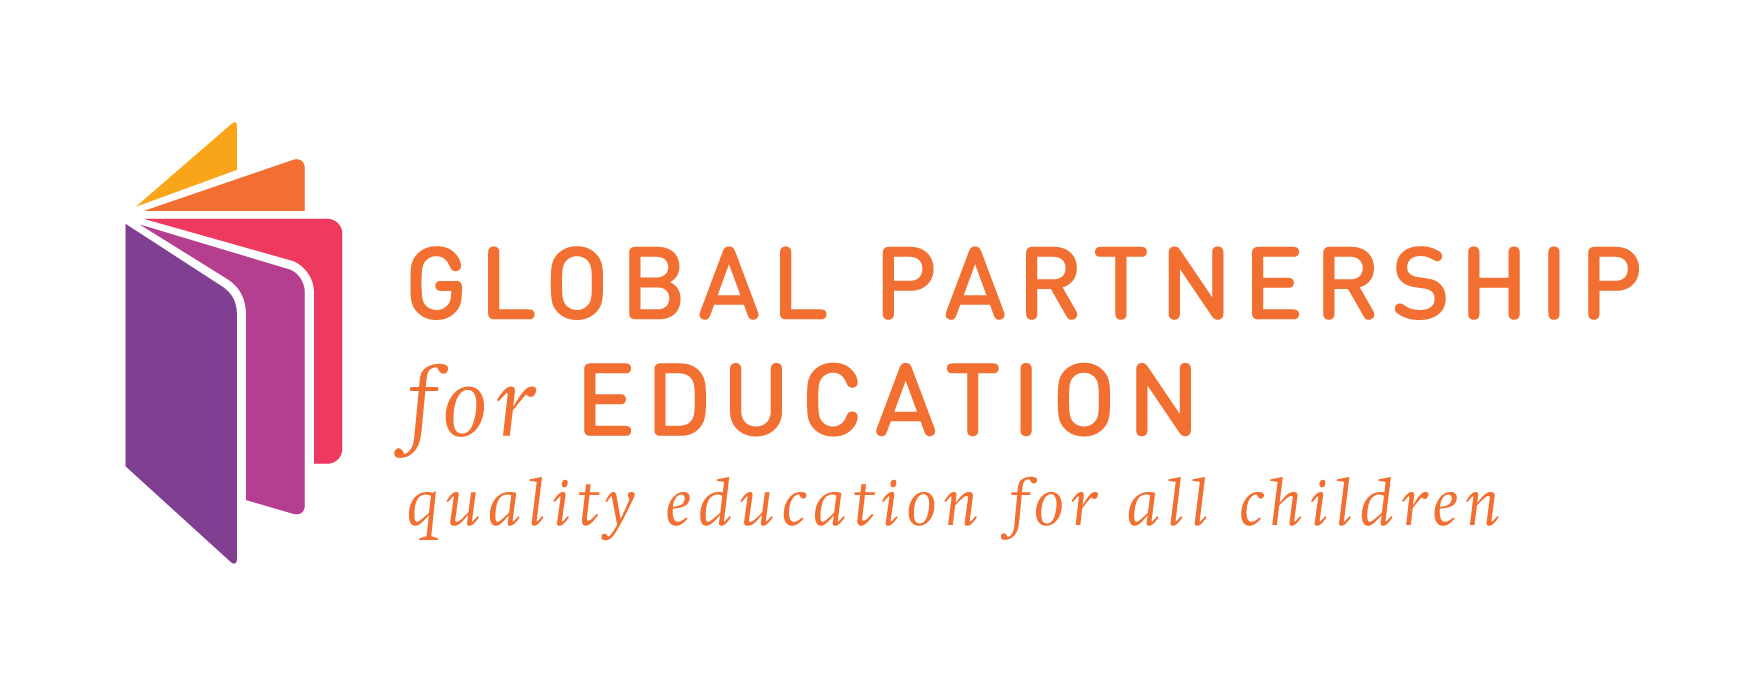 Global Partnership for Education